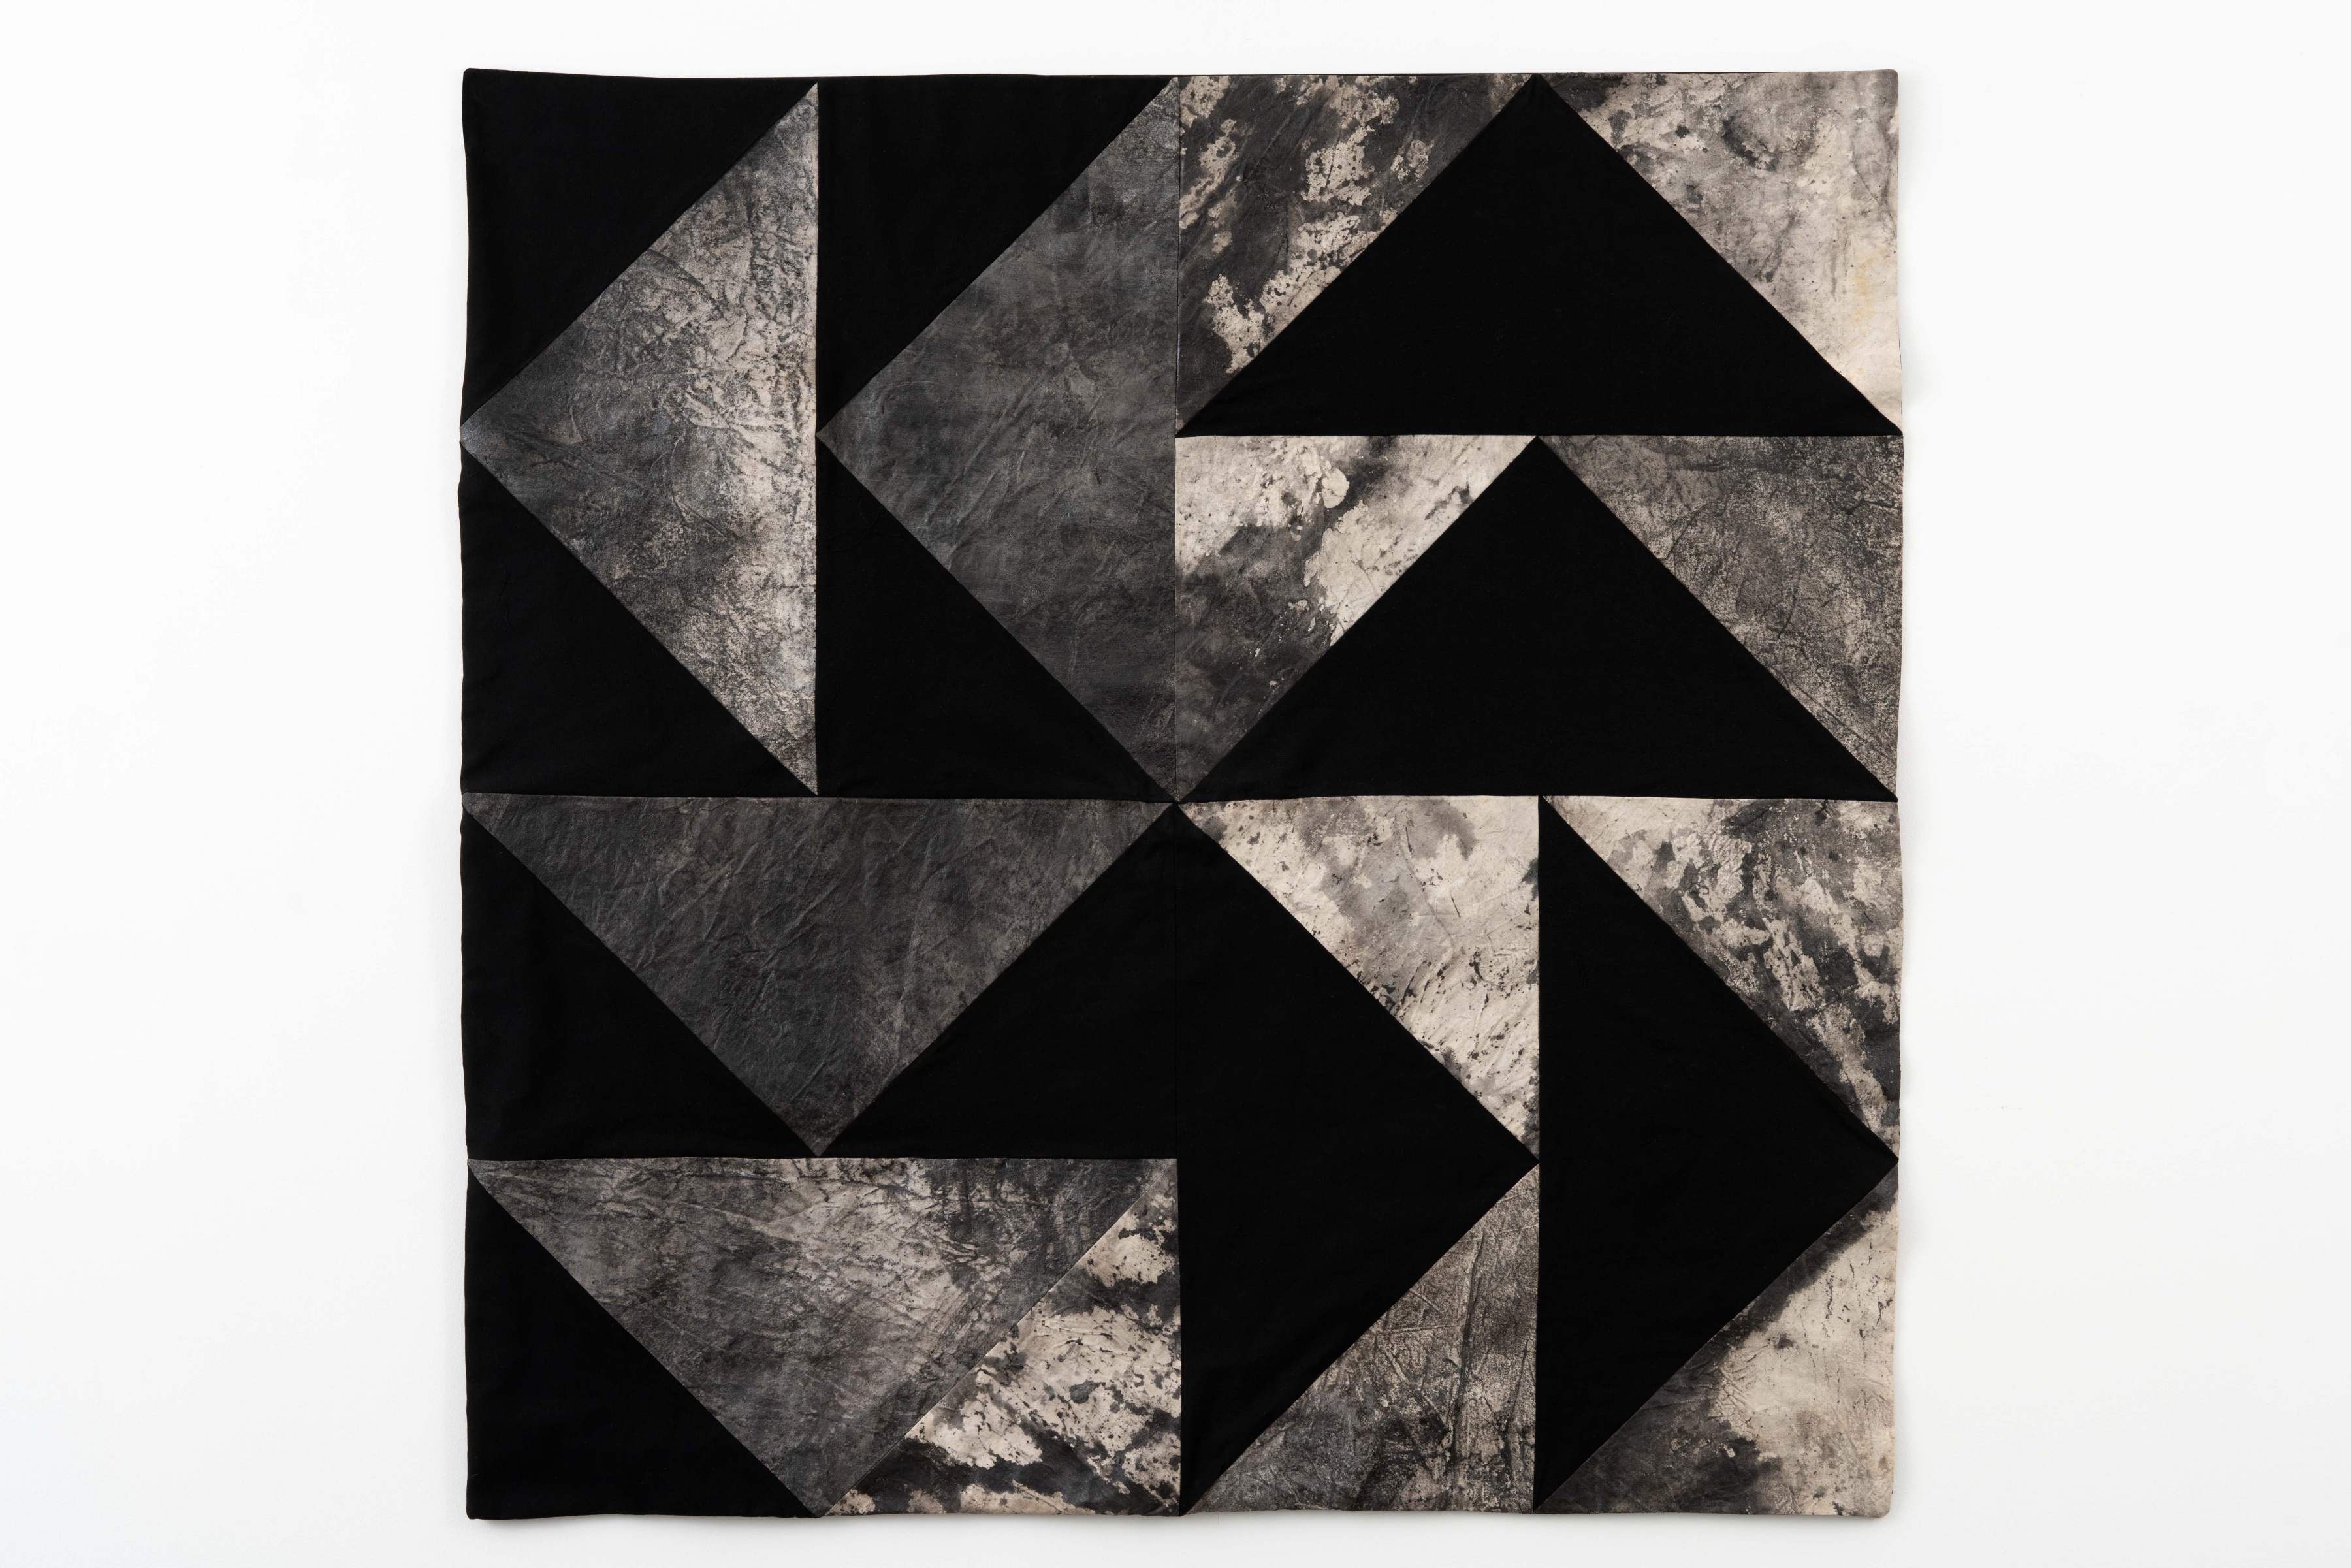 Kapwani Kiwanga
Triangulation: 3
2021
Fabric, pigment and evaporated Atlantic sea water
Work: 120 x 120 cm | 47.2 x 47.2 in
Unique

Enquire